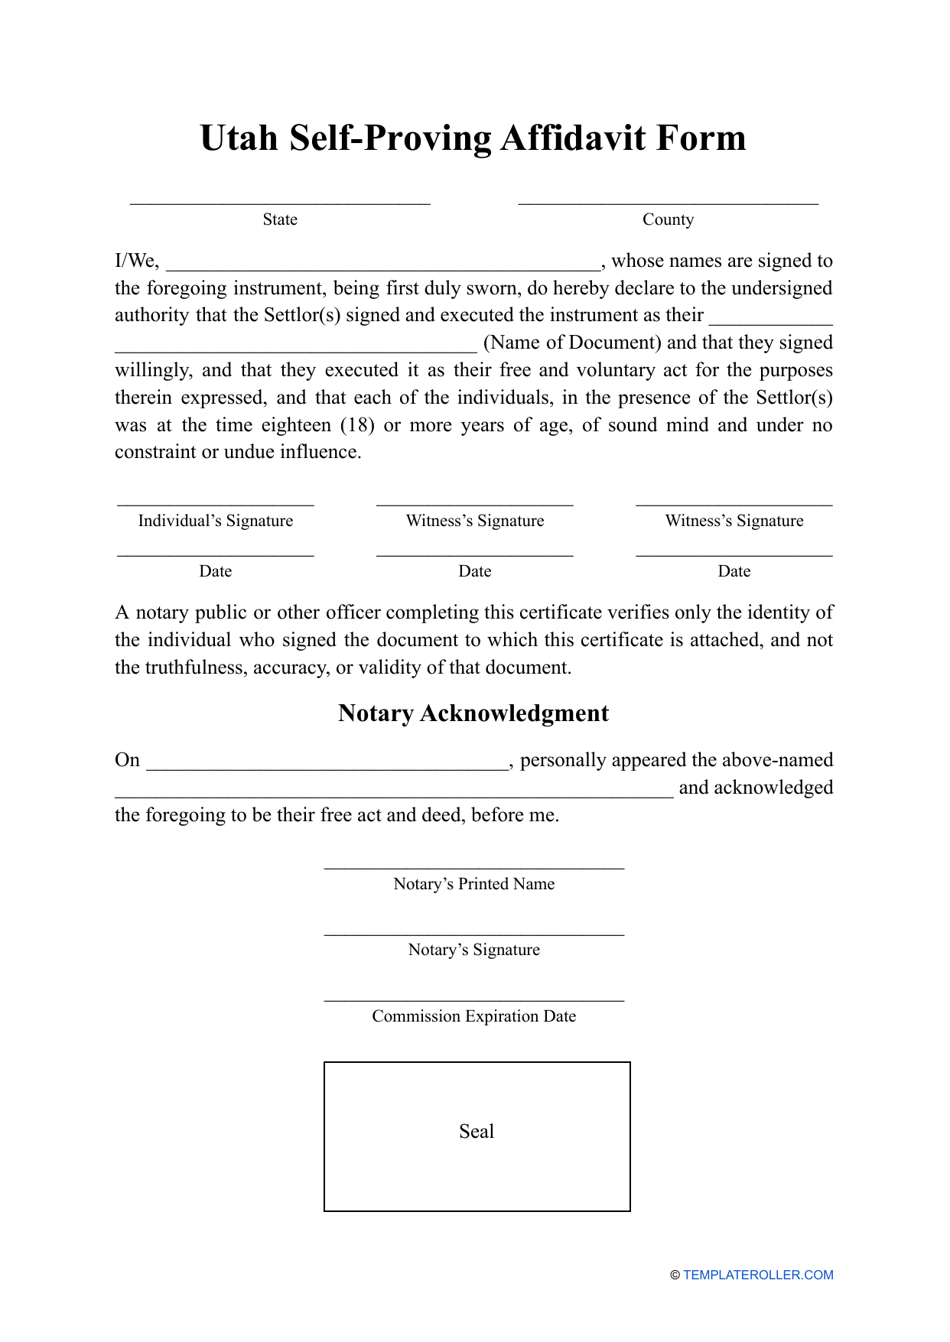 Self-proving Affidavit Form - Utah, Page 1